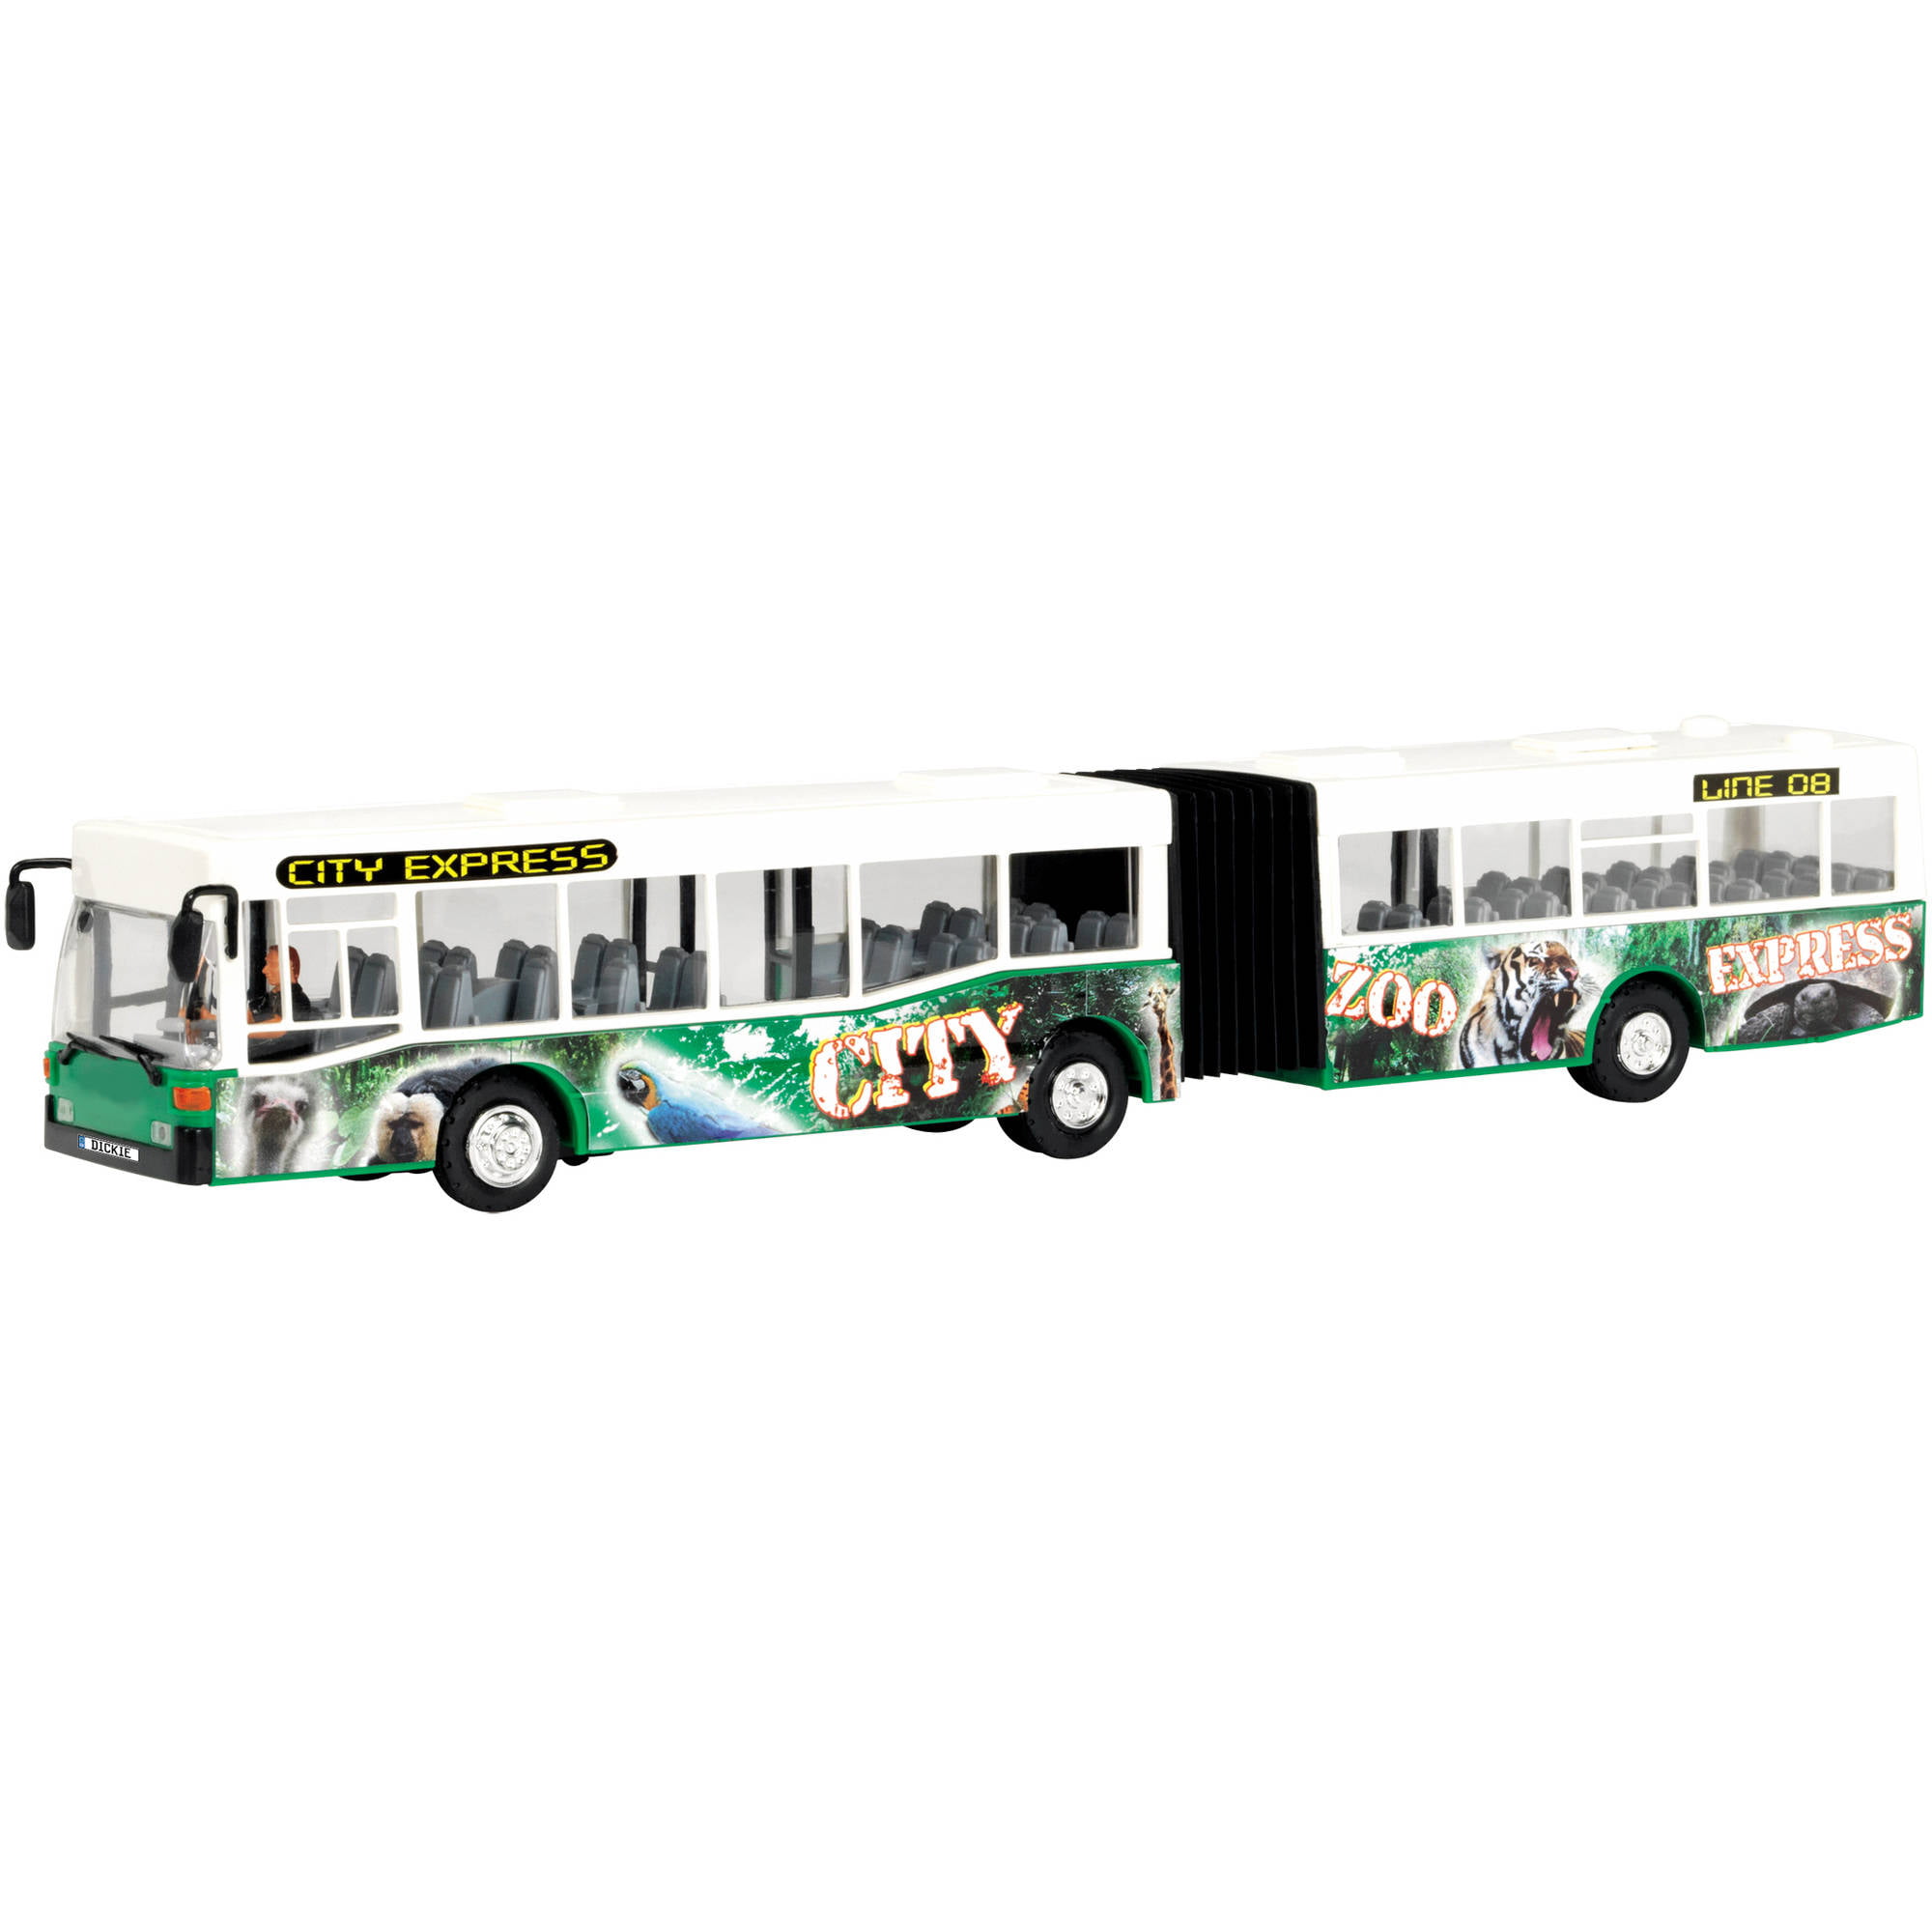 38cm Dickie Toys City Express Bus 